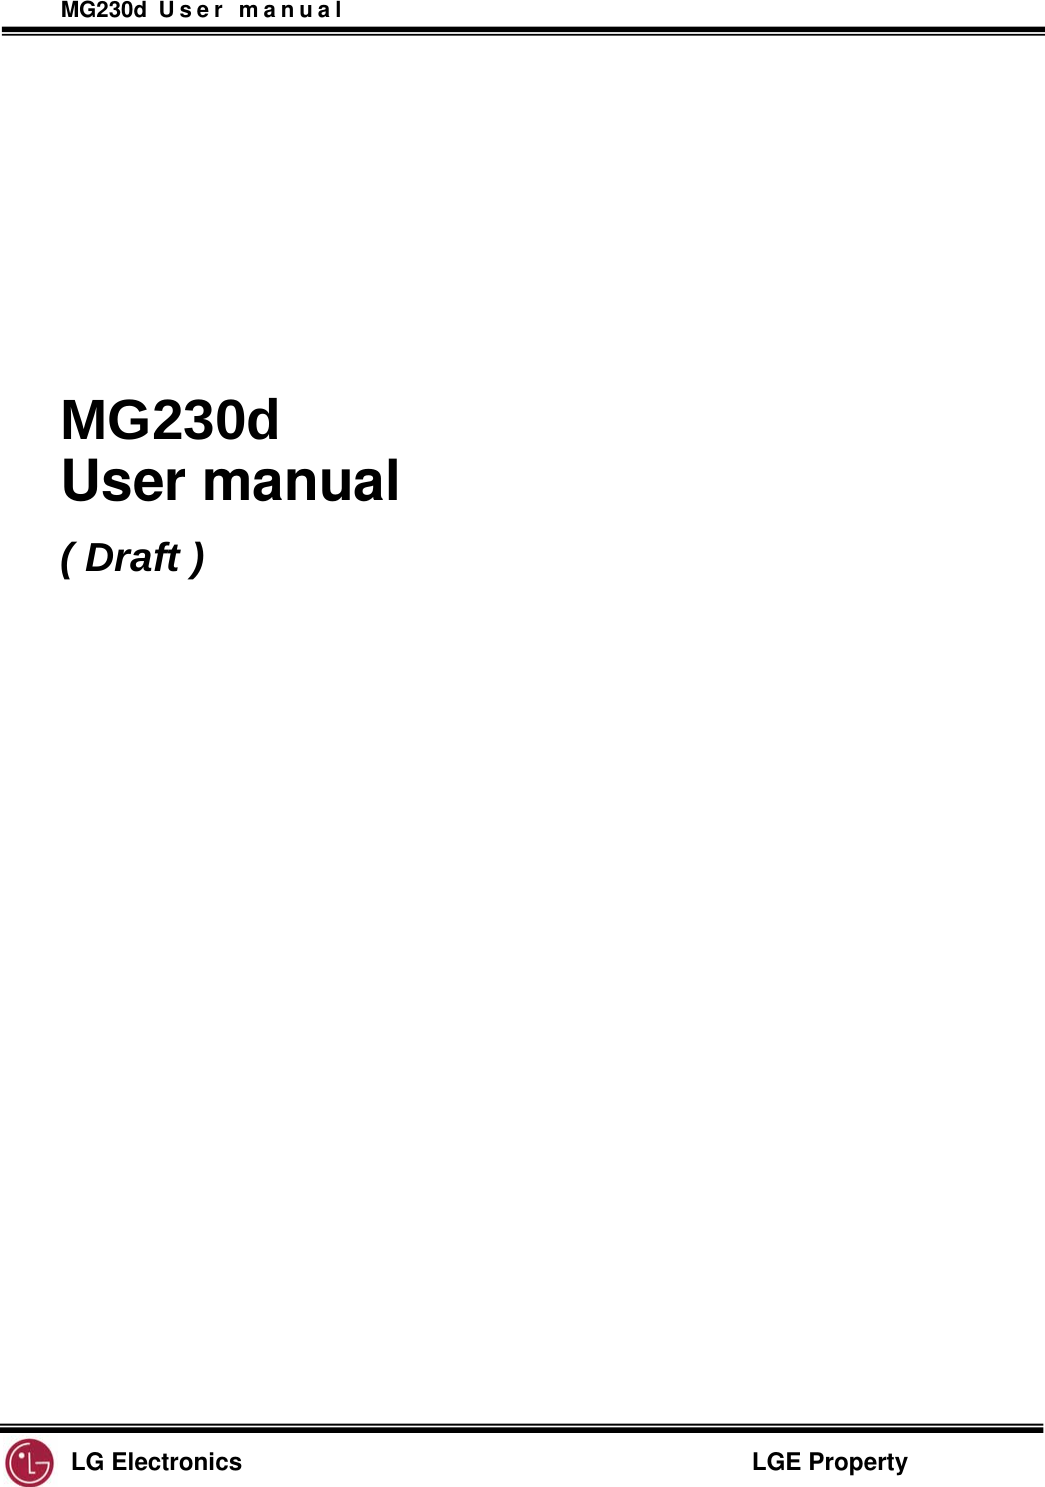 MG230d User manual                                       LG Electronics                                                 LGE Property              MG230d User manual ( Draft )                        